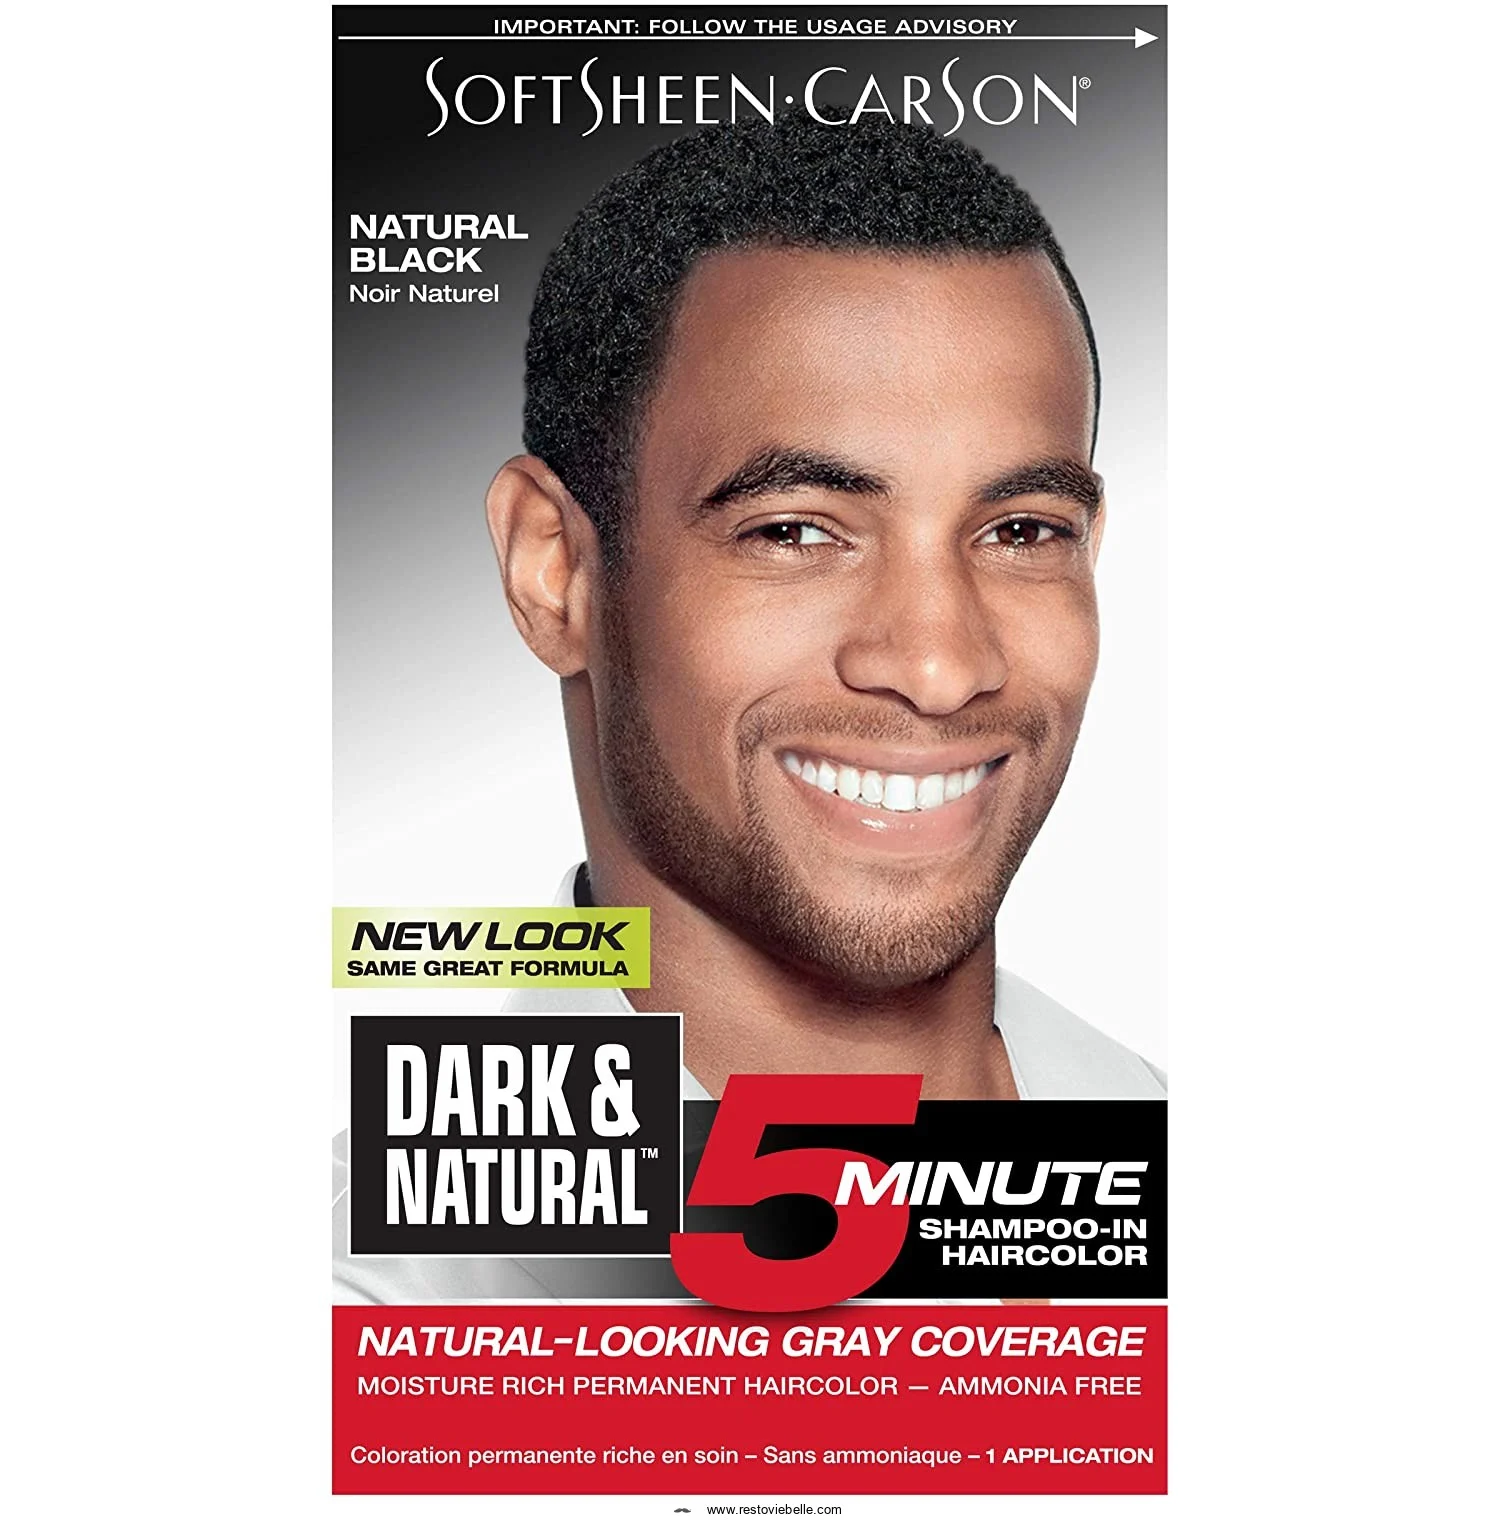 Softsheen-Carson Natural Hair Dye For African American Men